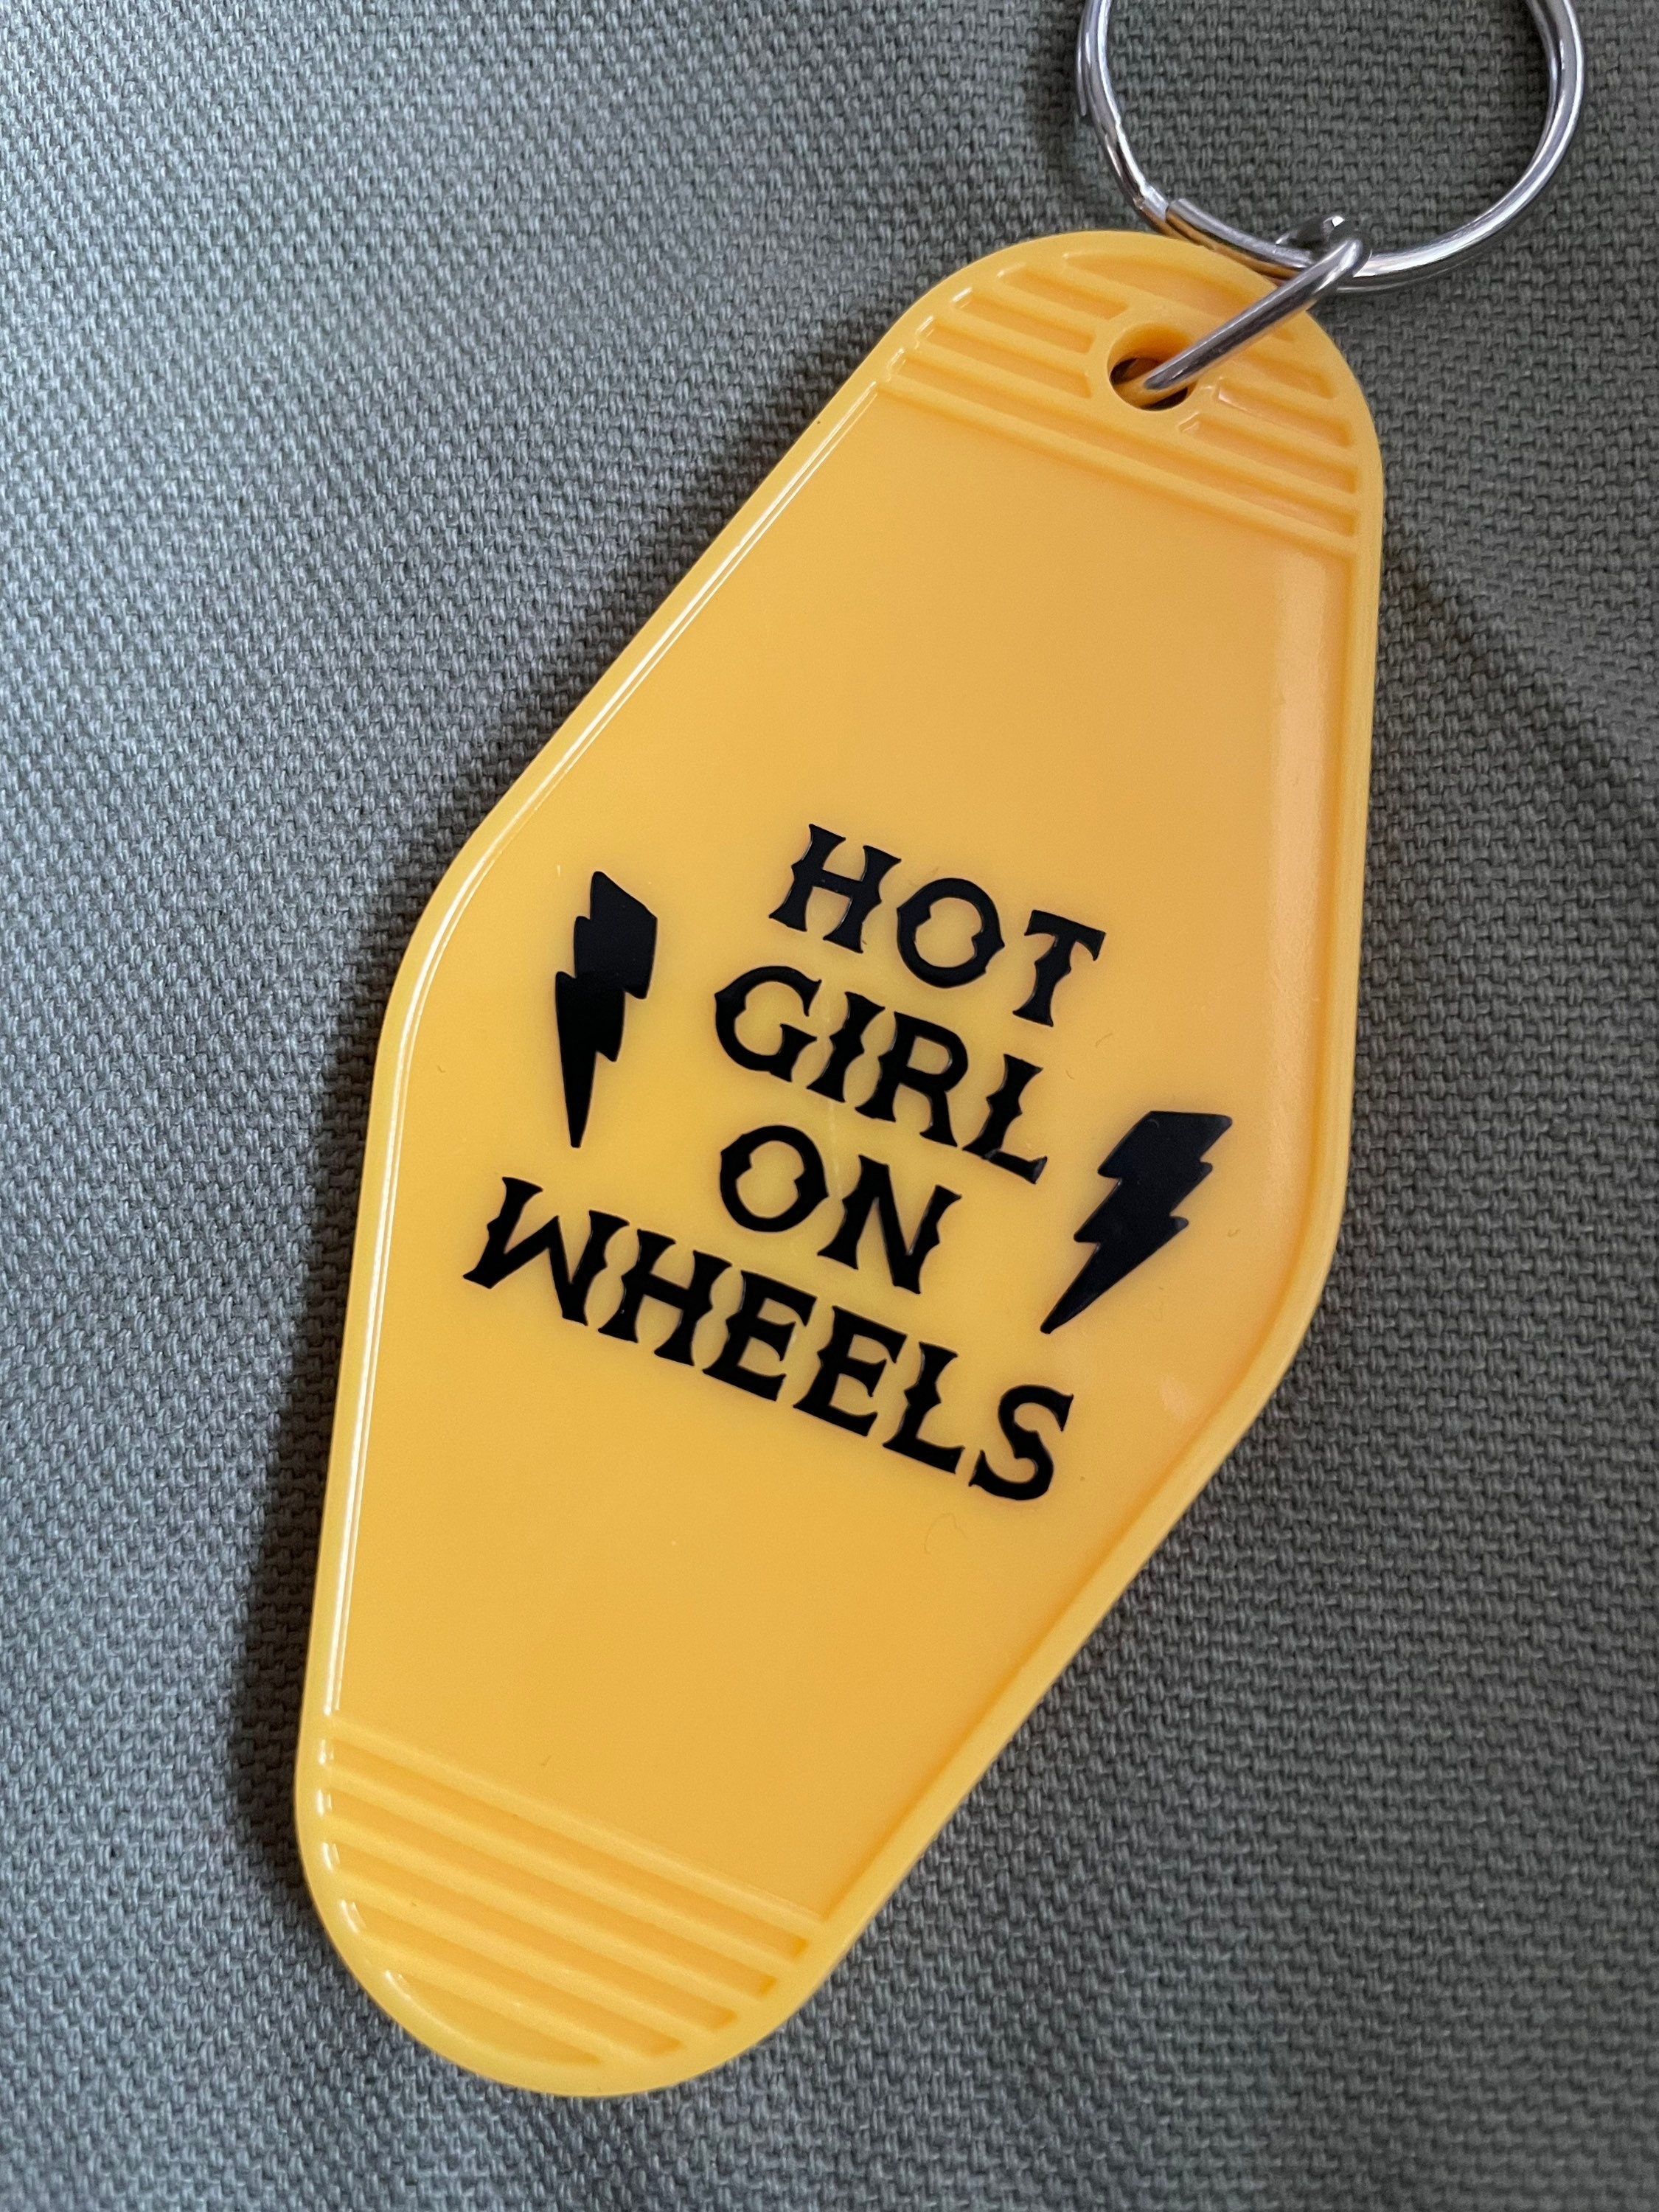 Hot girl wheels for sale  